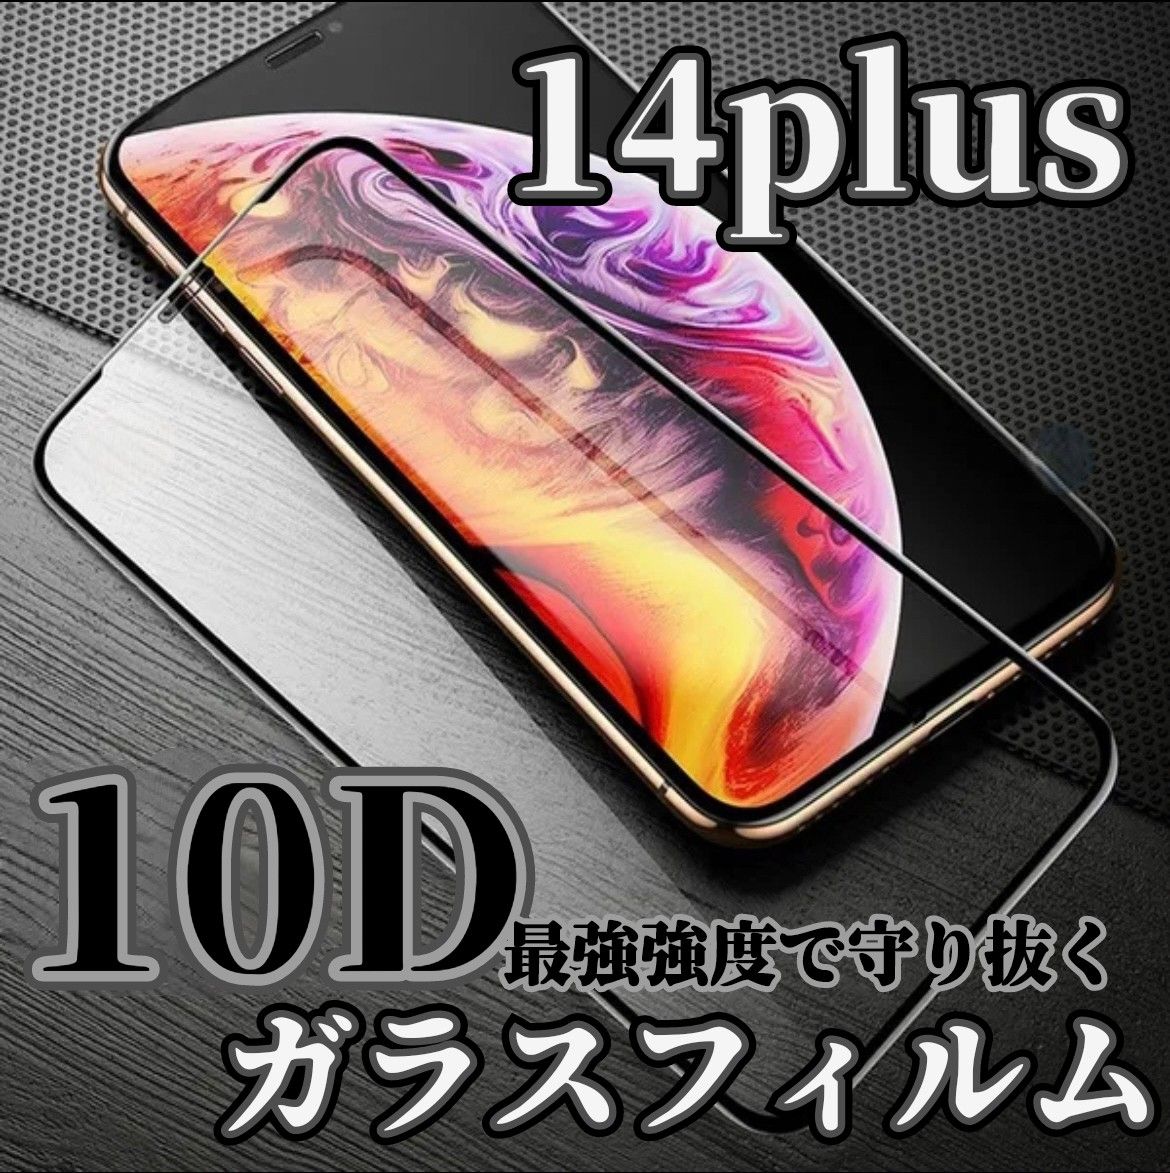 IPhone14plus専用 最強強度 10D全画面ガラスフィルム フィルム